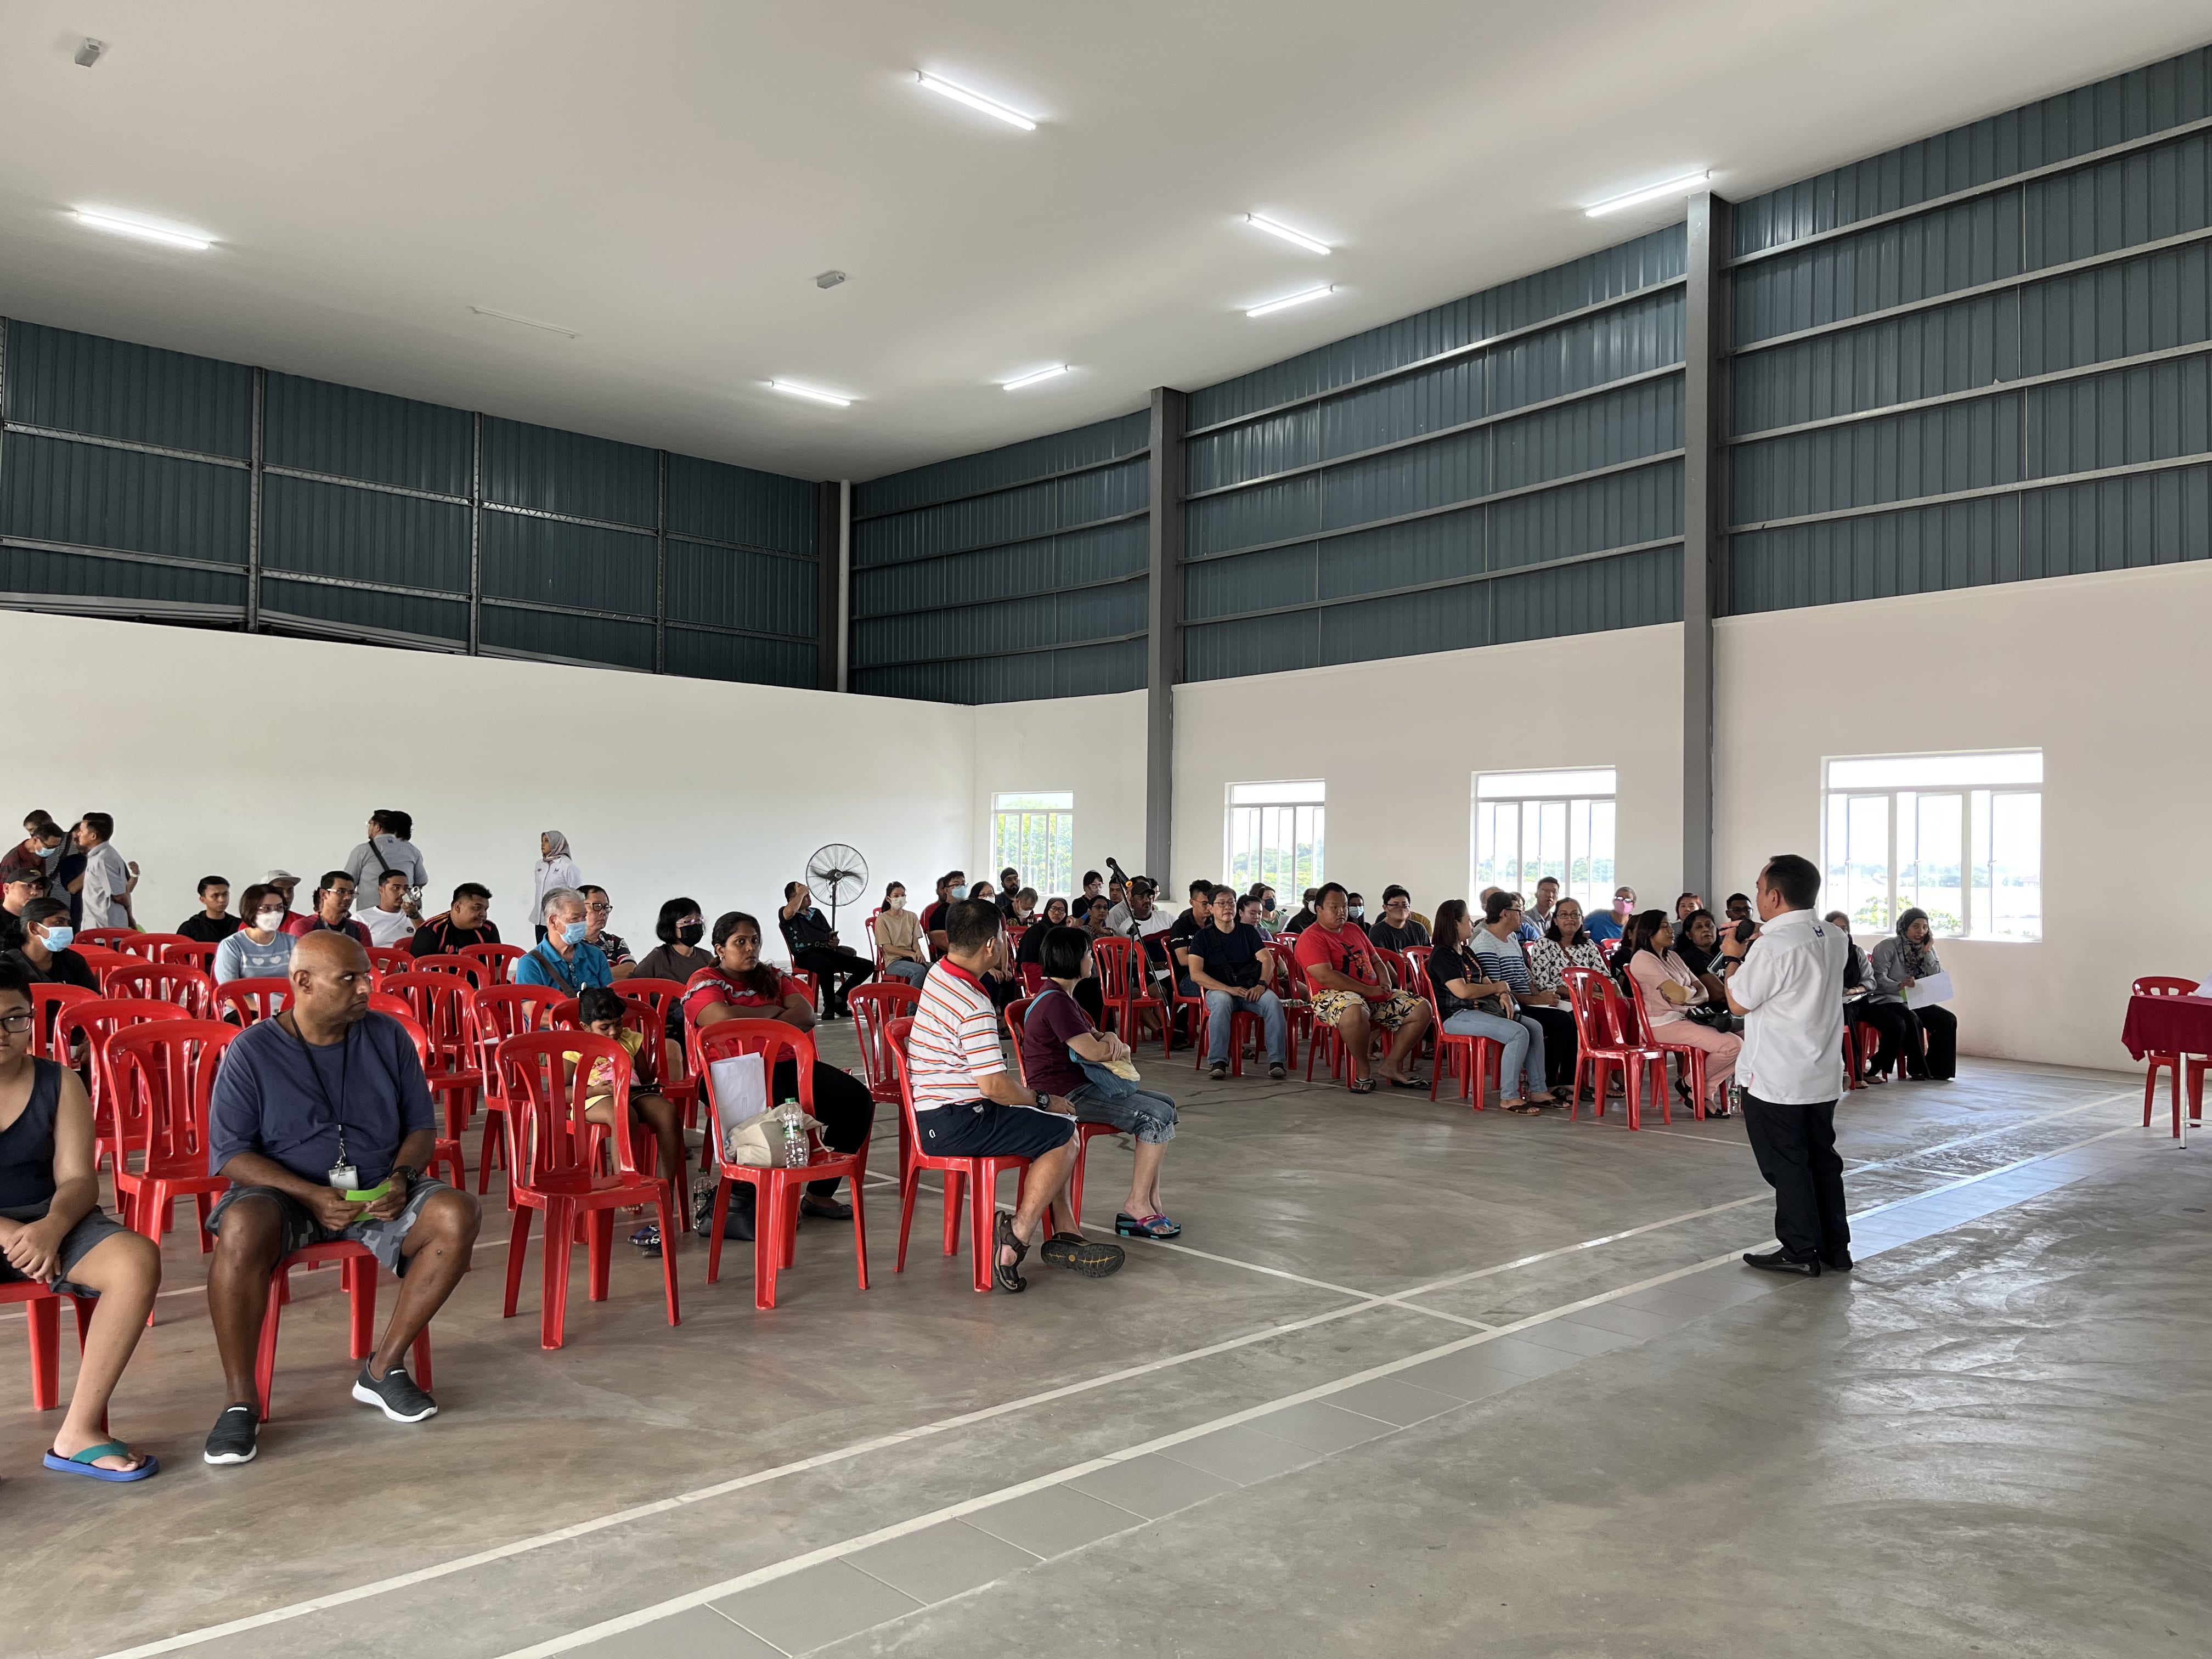 Cover image of Community Past Program: Annual Grand Meeting – First Annual Grand Meeting of Residensi Falim, Perak.